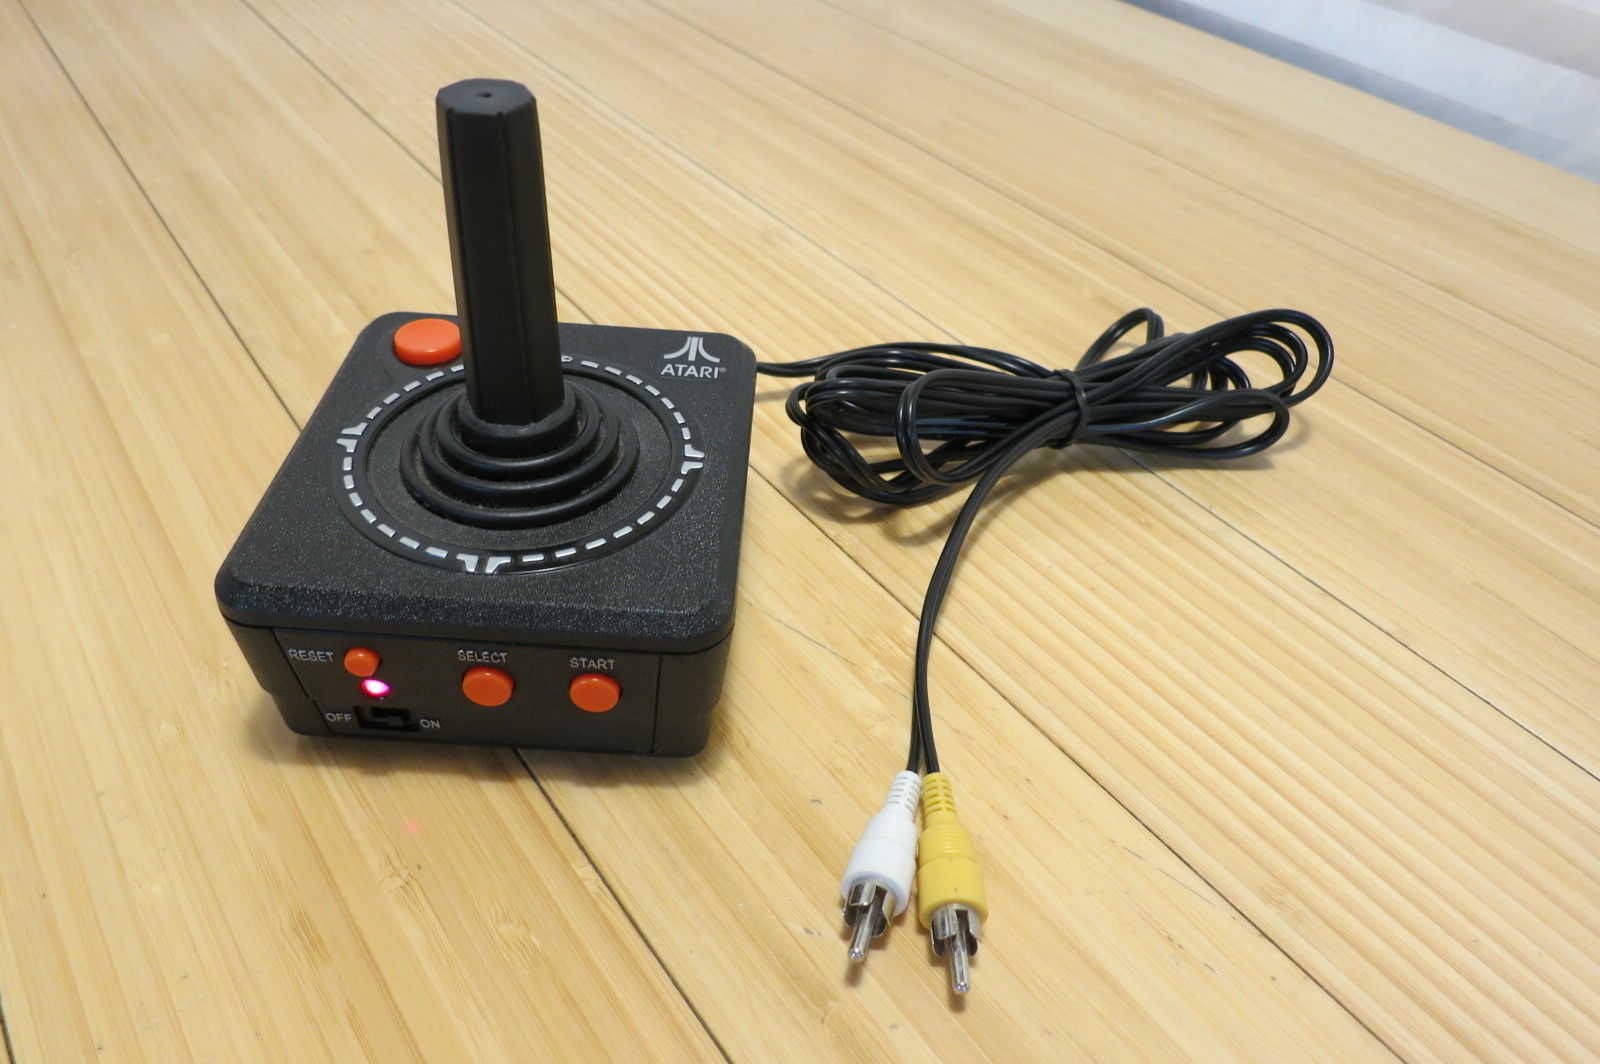 Jakks Pacific Atari Plug N Play Game 2002 TV Games Video Game System 